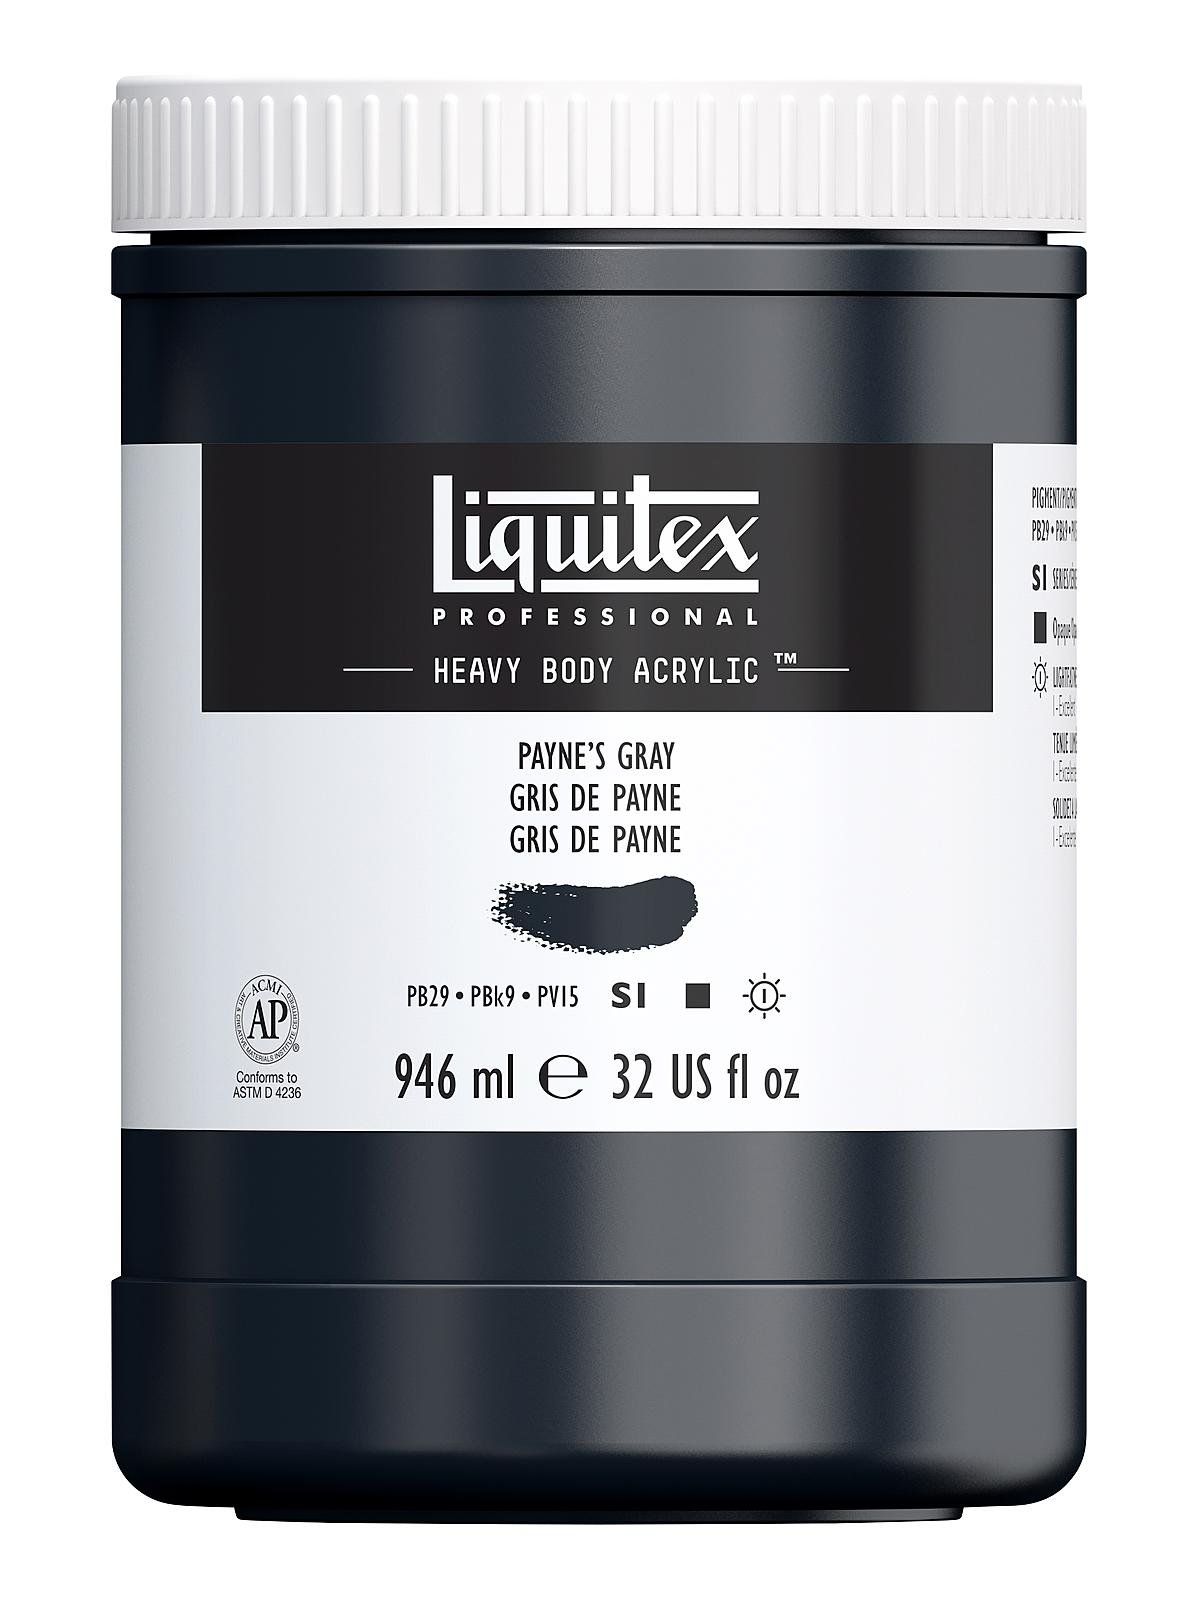 Liquitex Professional Heavy Body Acrylic Paint 2-oz tube, Turquoise Deep